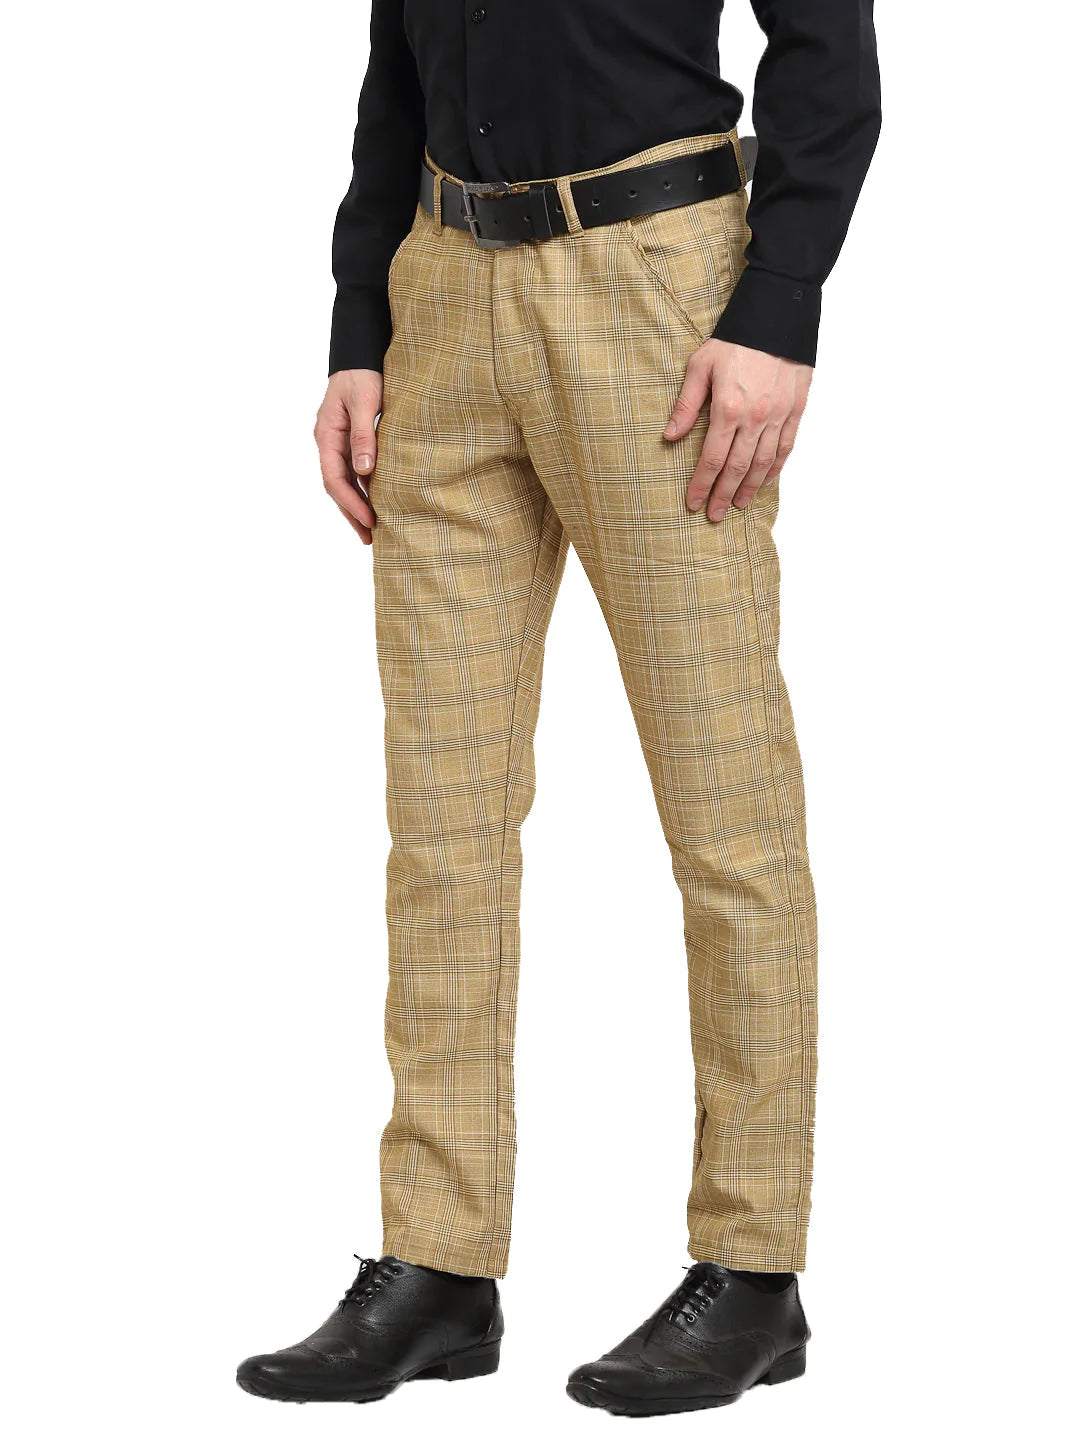 Jainish Men's Beige Cotton Checked Formal Trousers ( FGP 267Beige )